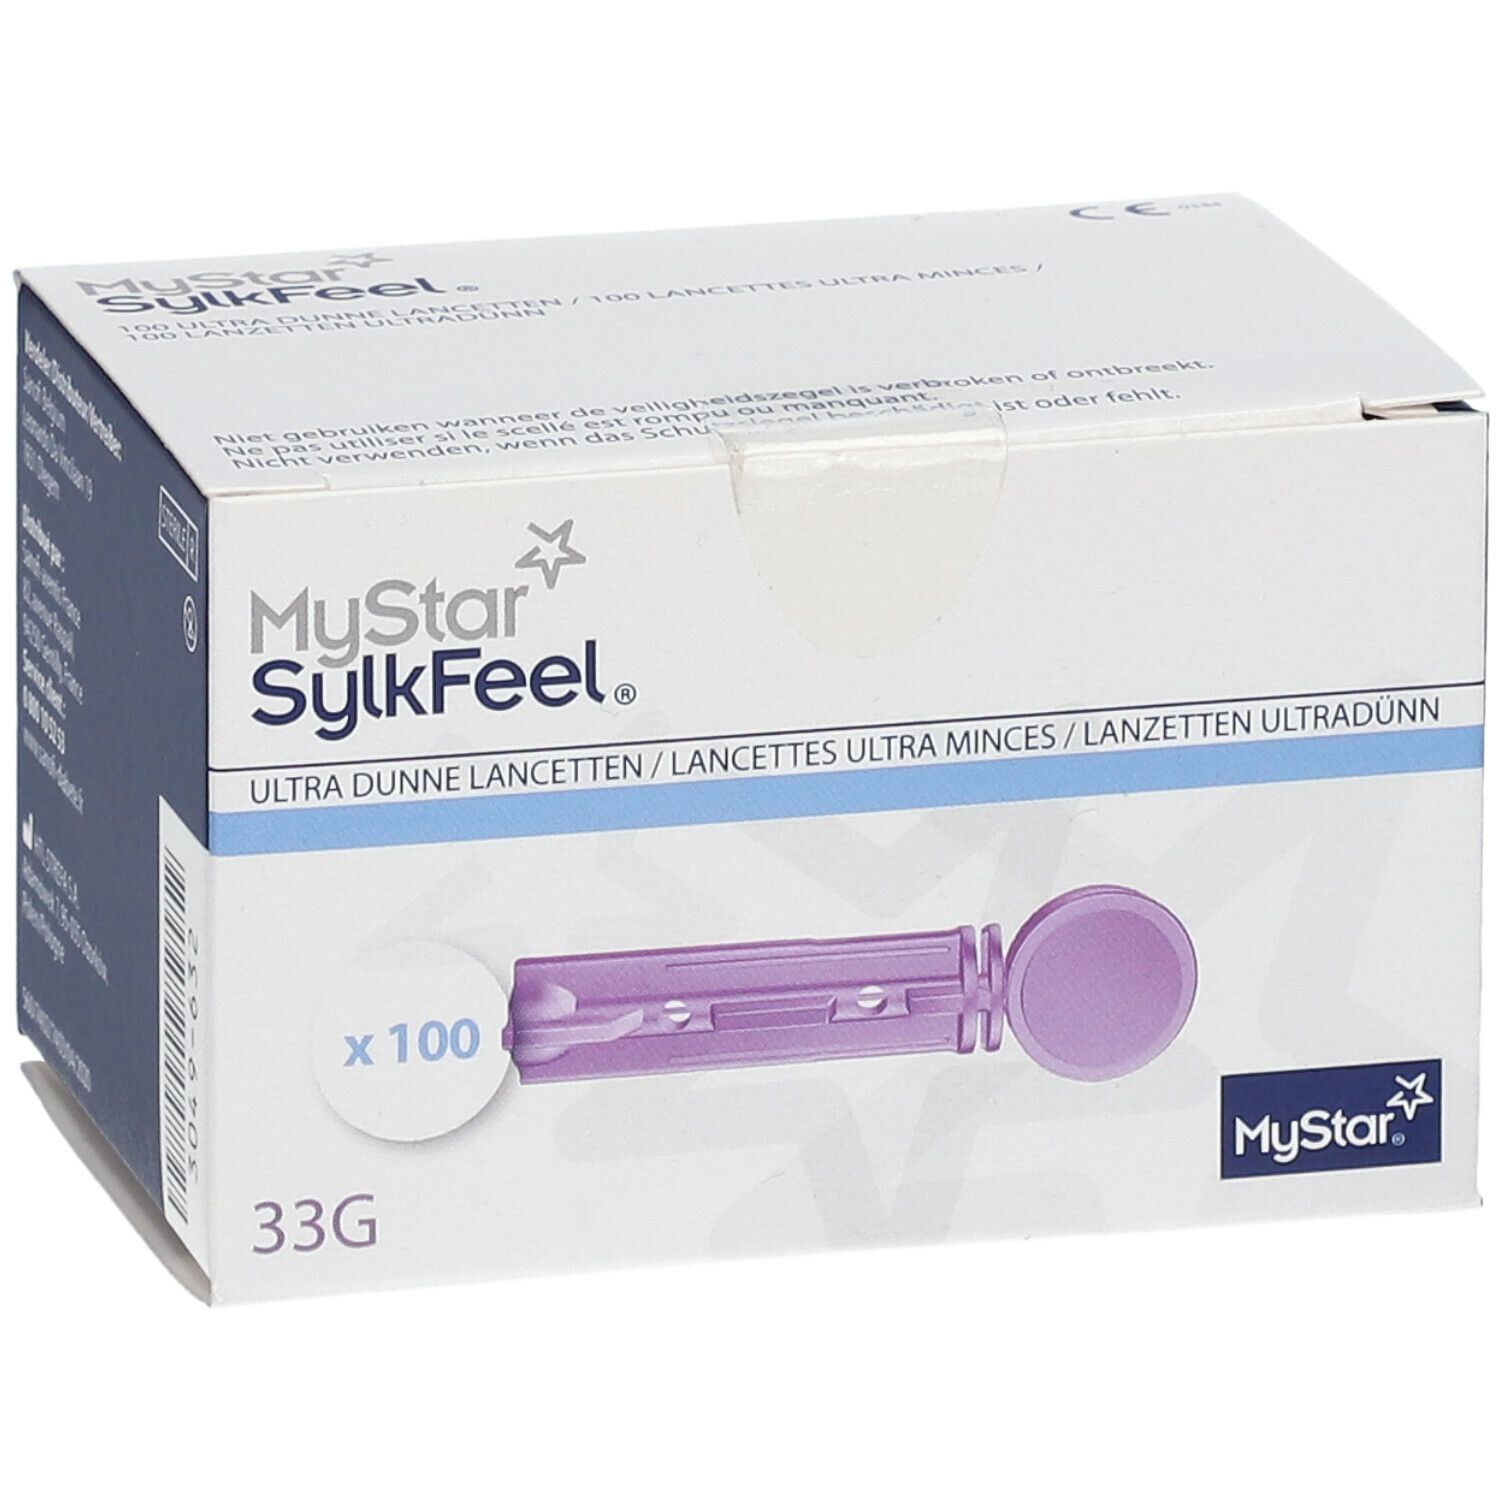 Mystar Sylkfeel 33g Lancet